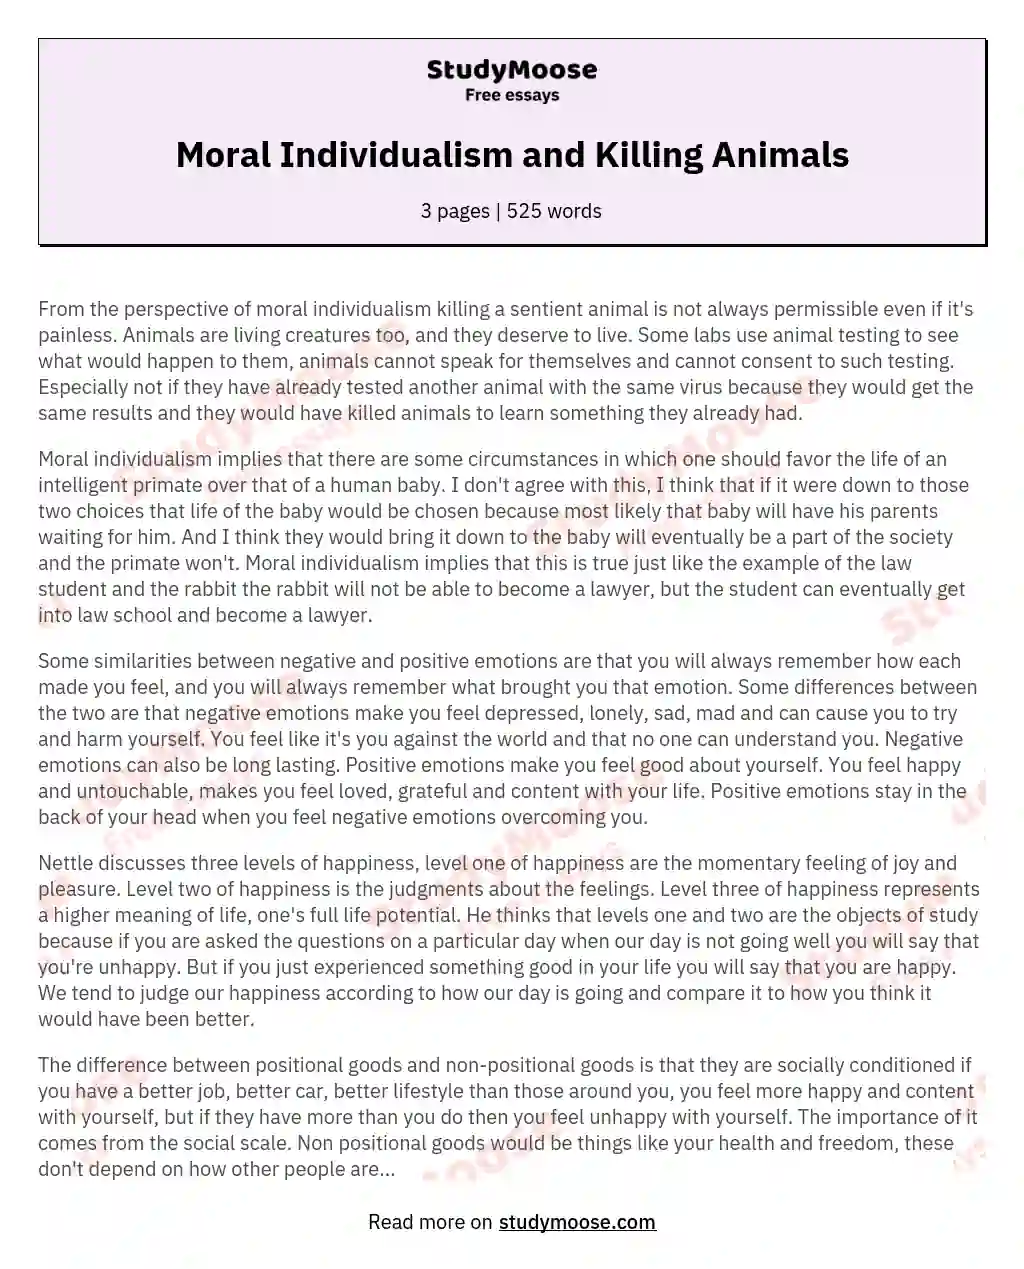 Moral Individualism and Killing Animals essay